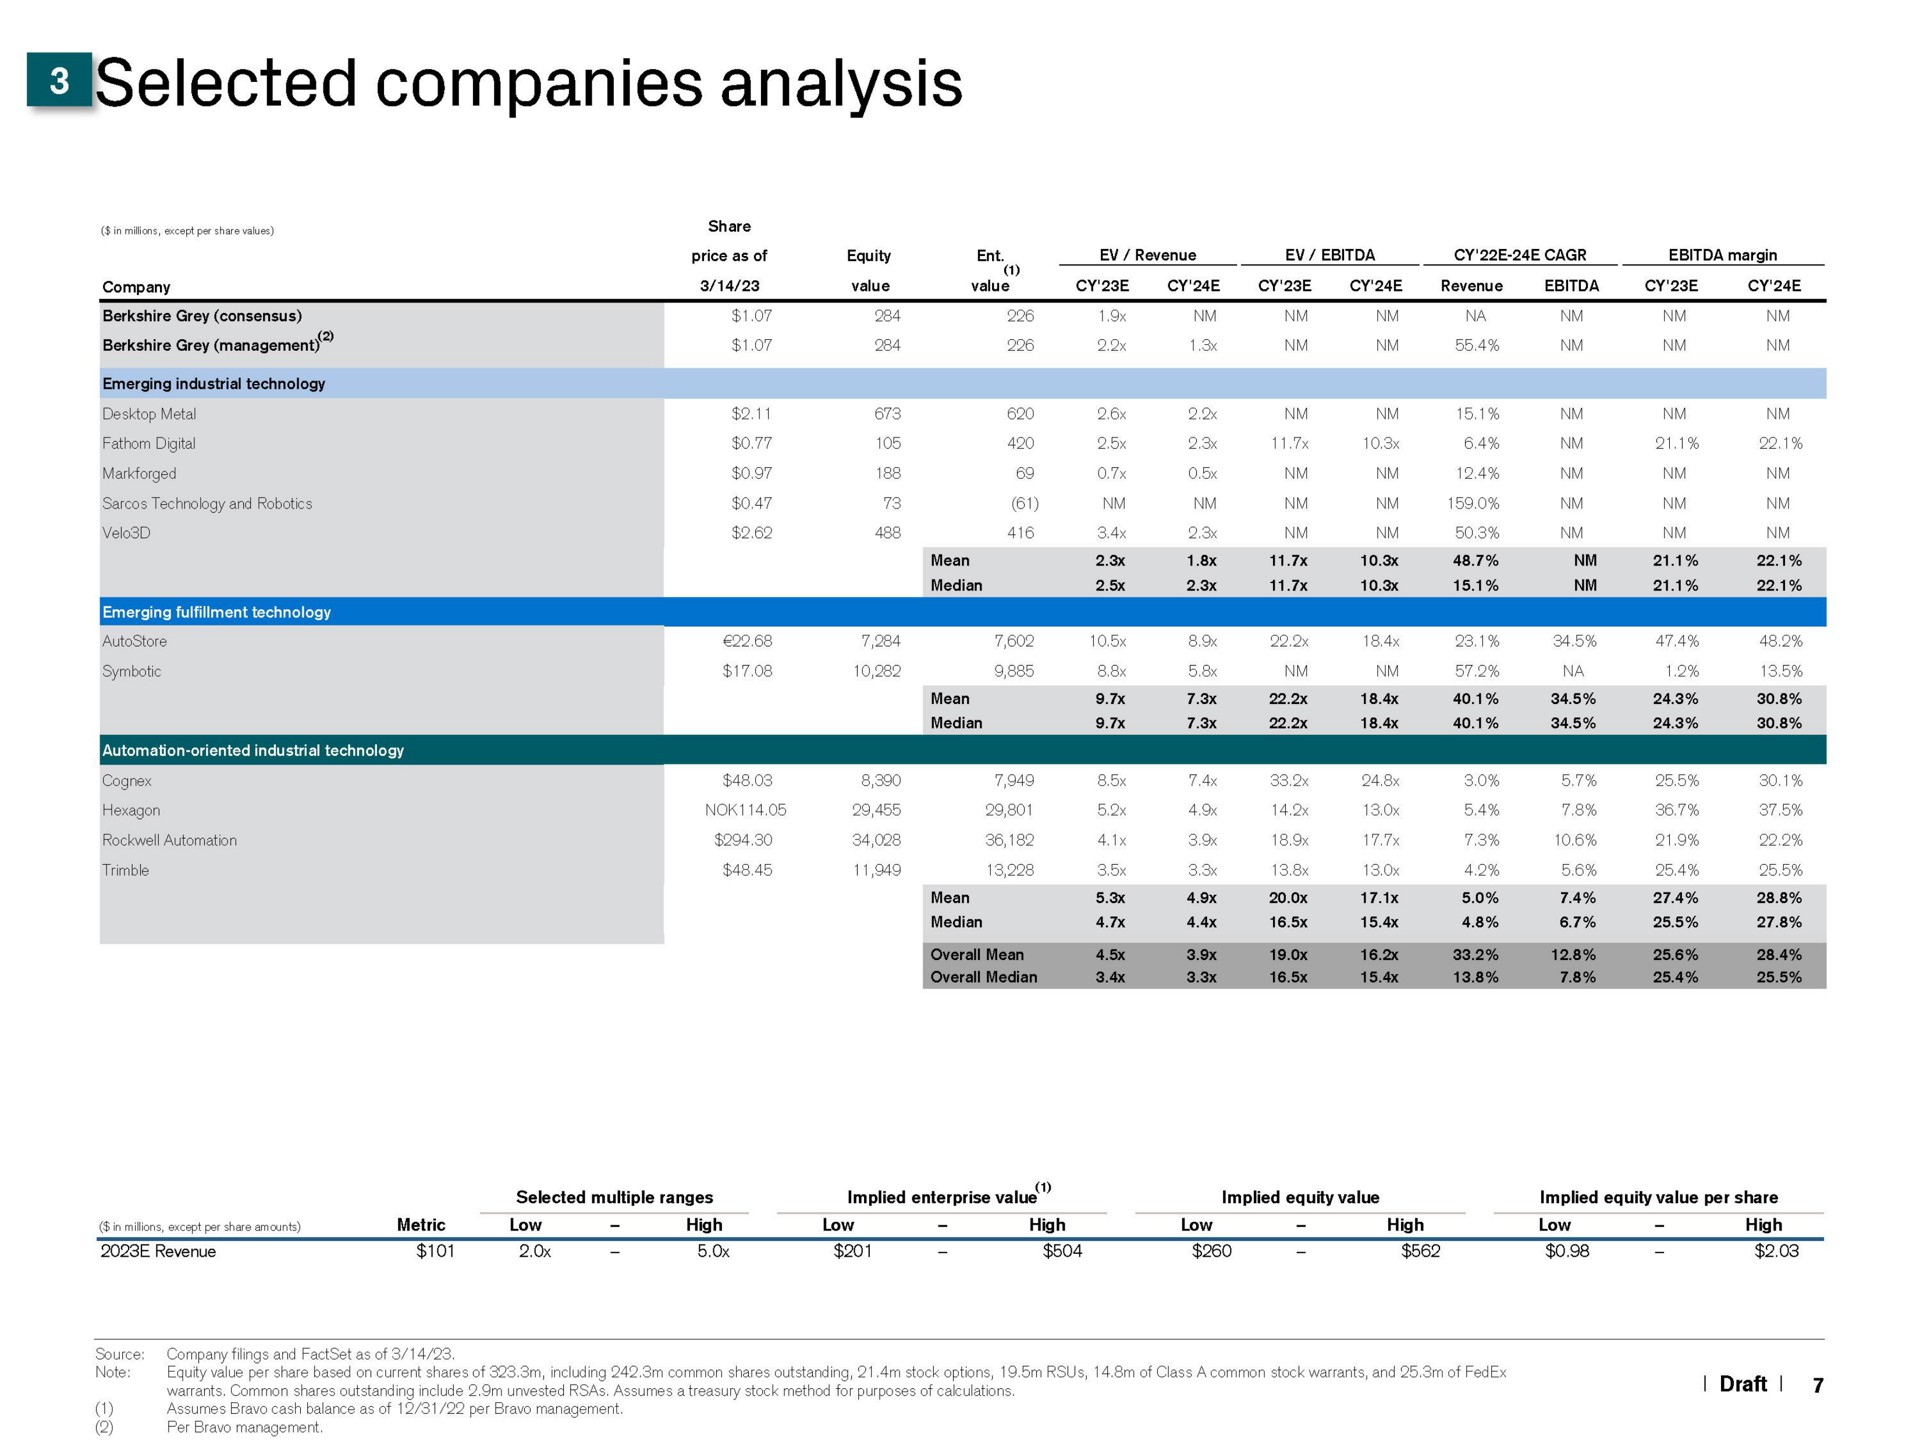 companies analysis | Credit Suisse